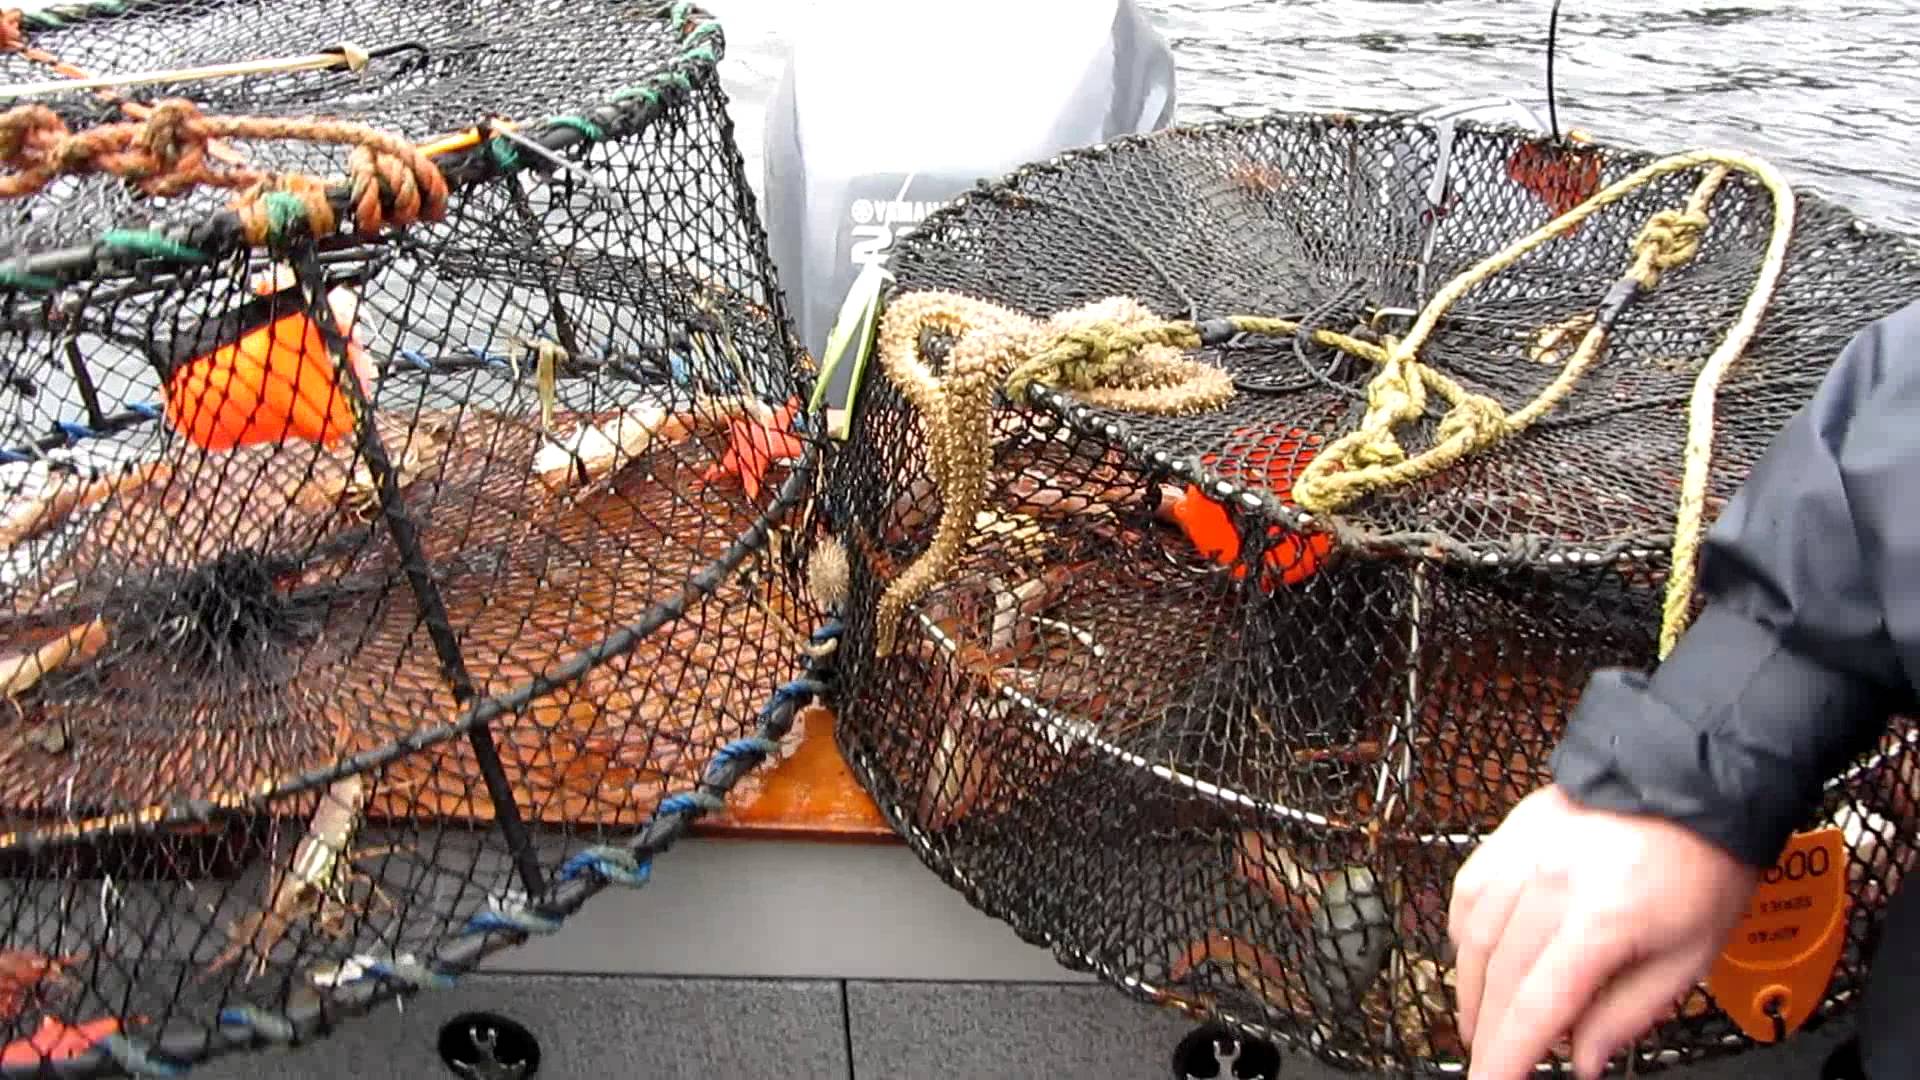 Southeast Alaska - hauling a shrimp pot in Ketchikan - YouTube